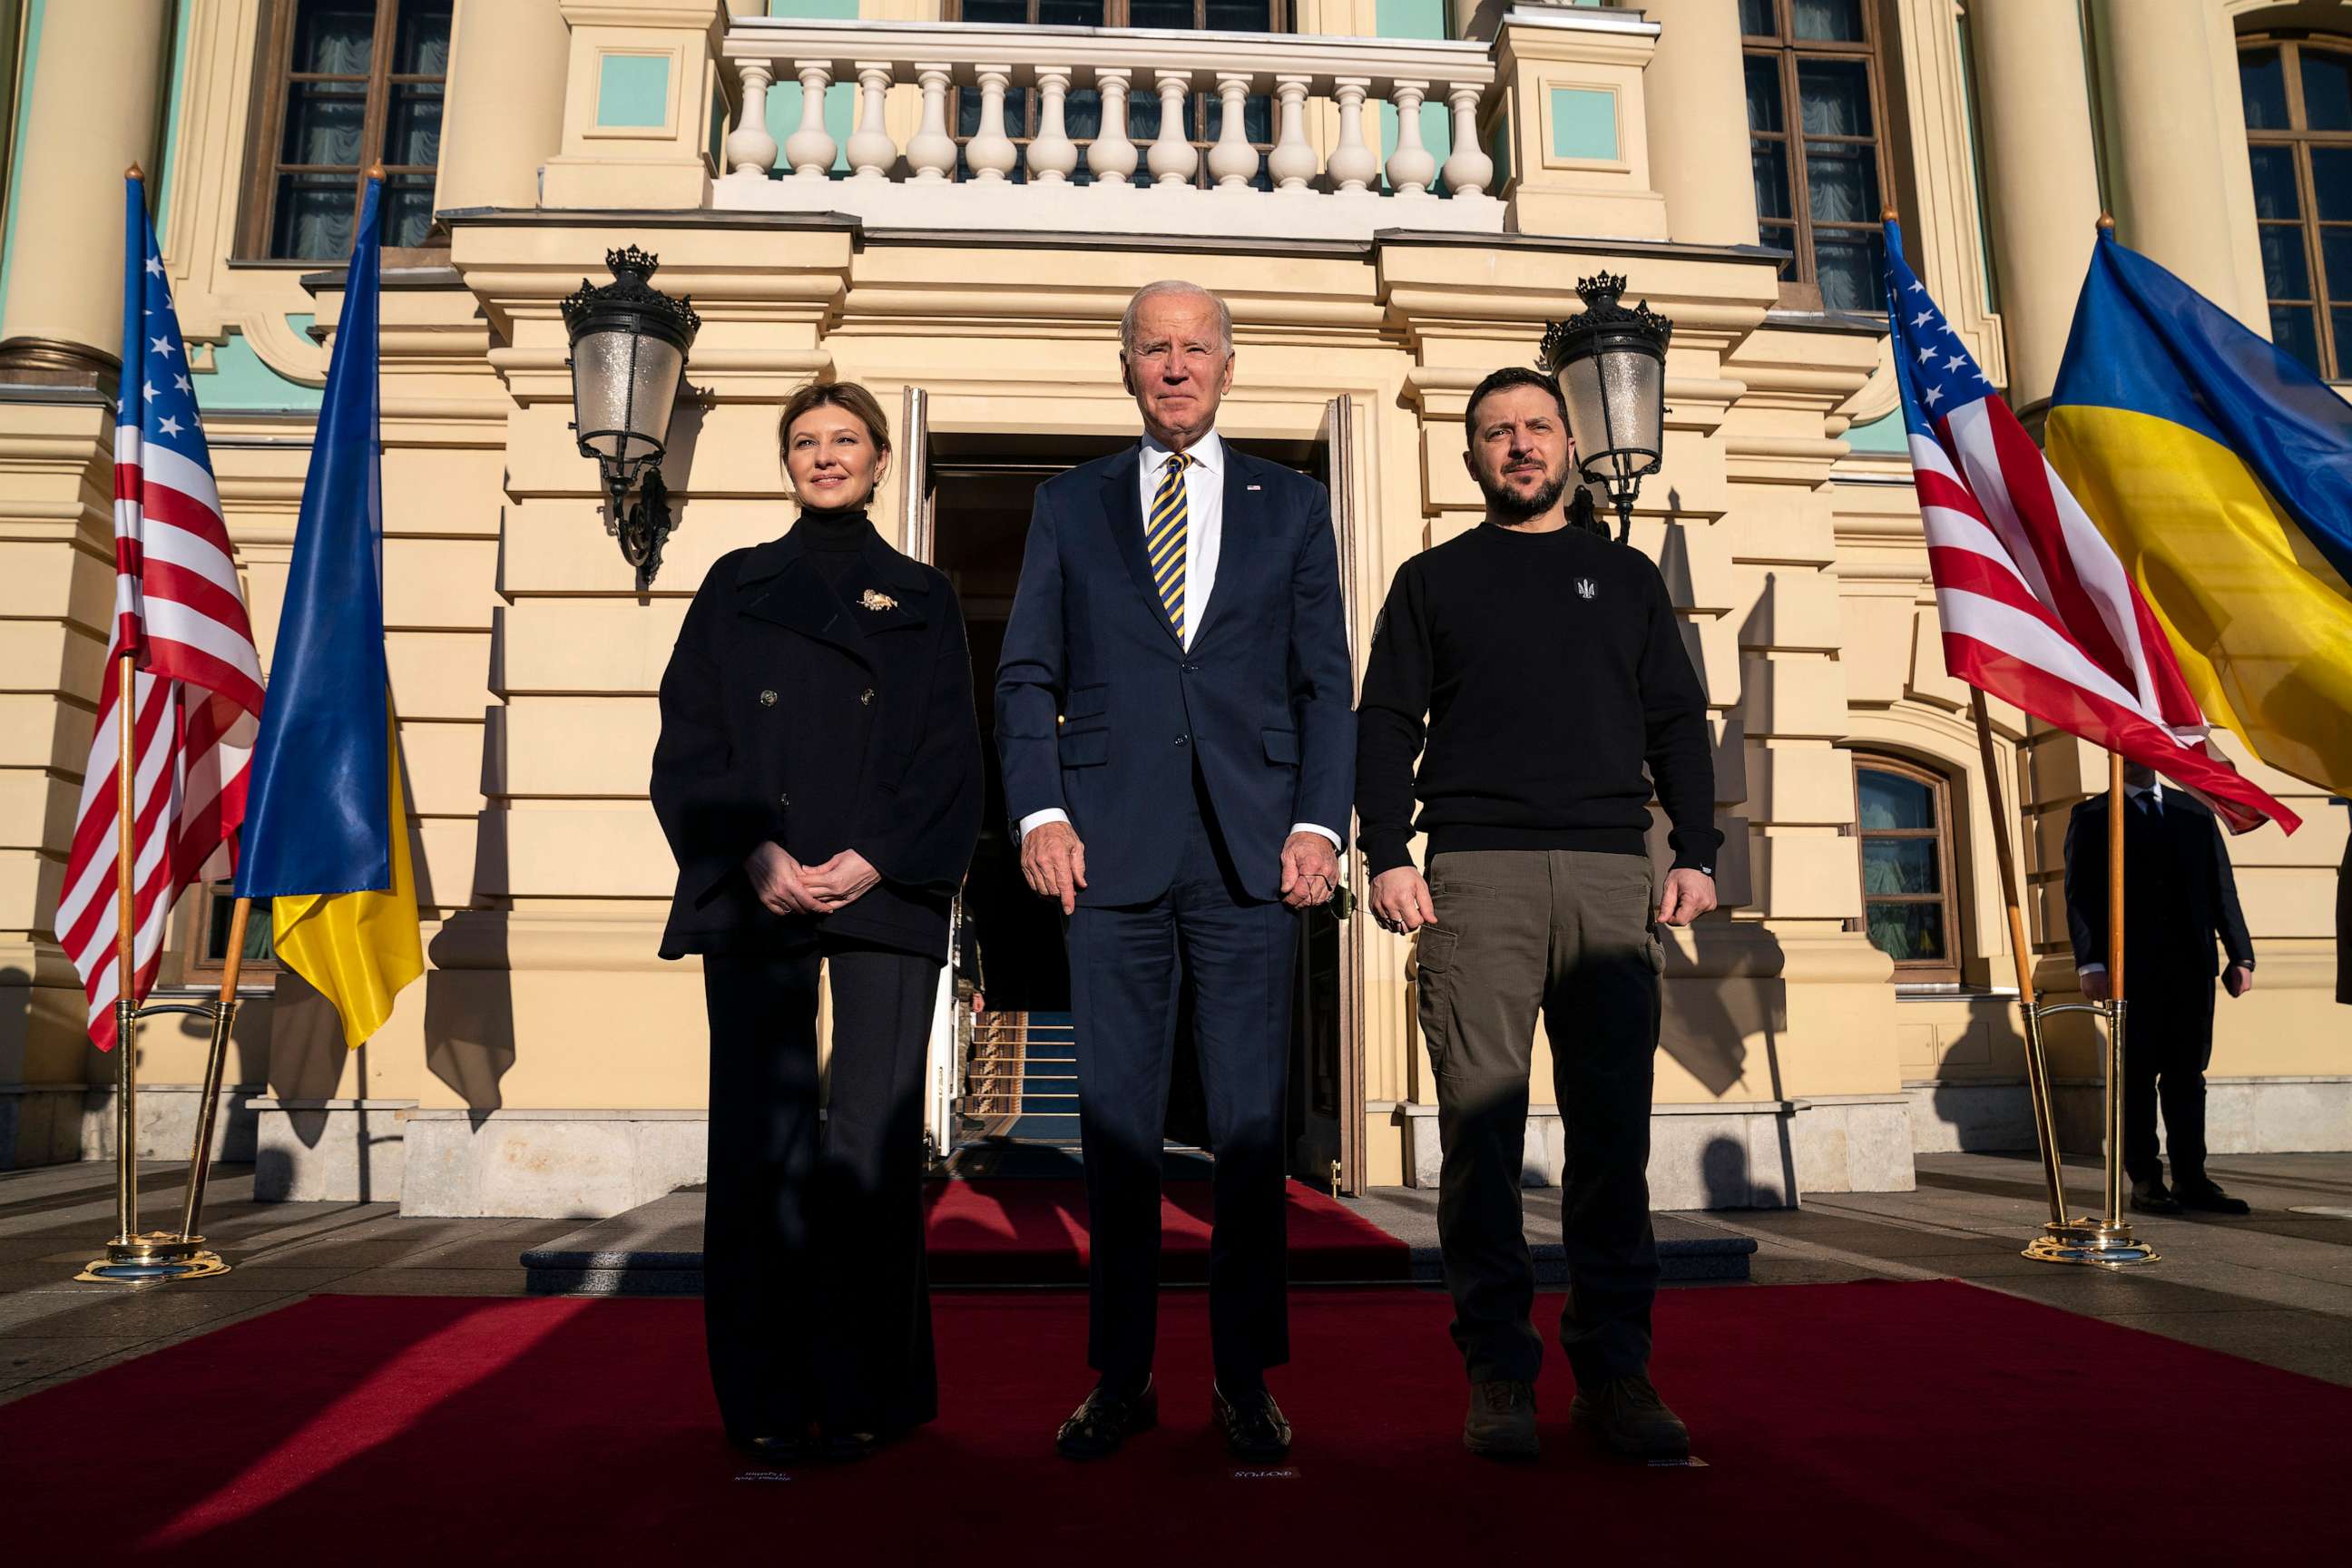 PHOTO: President Joe Biden, center, poses with Ukrainian President Volodymyr Zelenskyy, right, and Olena Zelenska, left, spouse of President Zelenskyy, at Mariinsky Palace during an unannounced visit in Kyiv, Ukraine, Monday, Feb. 20, 2023.